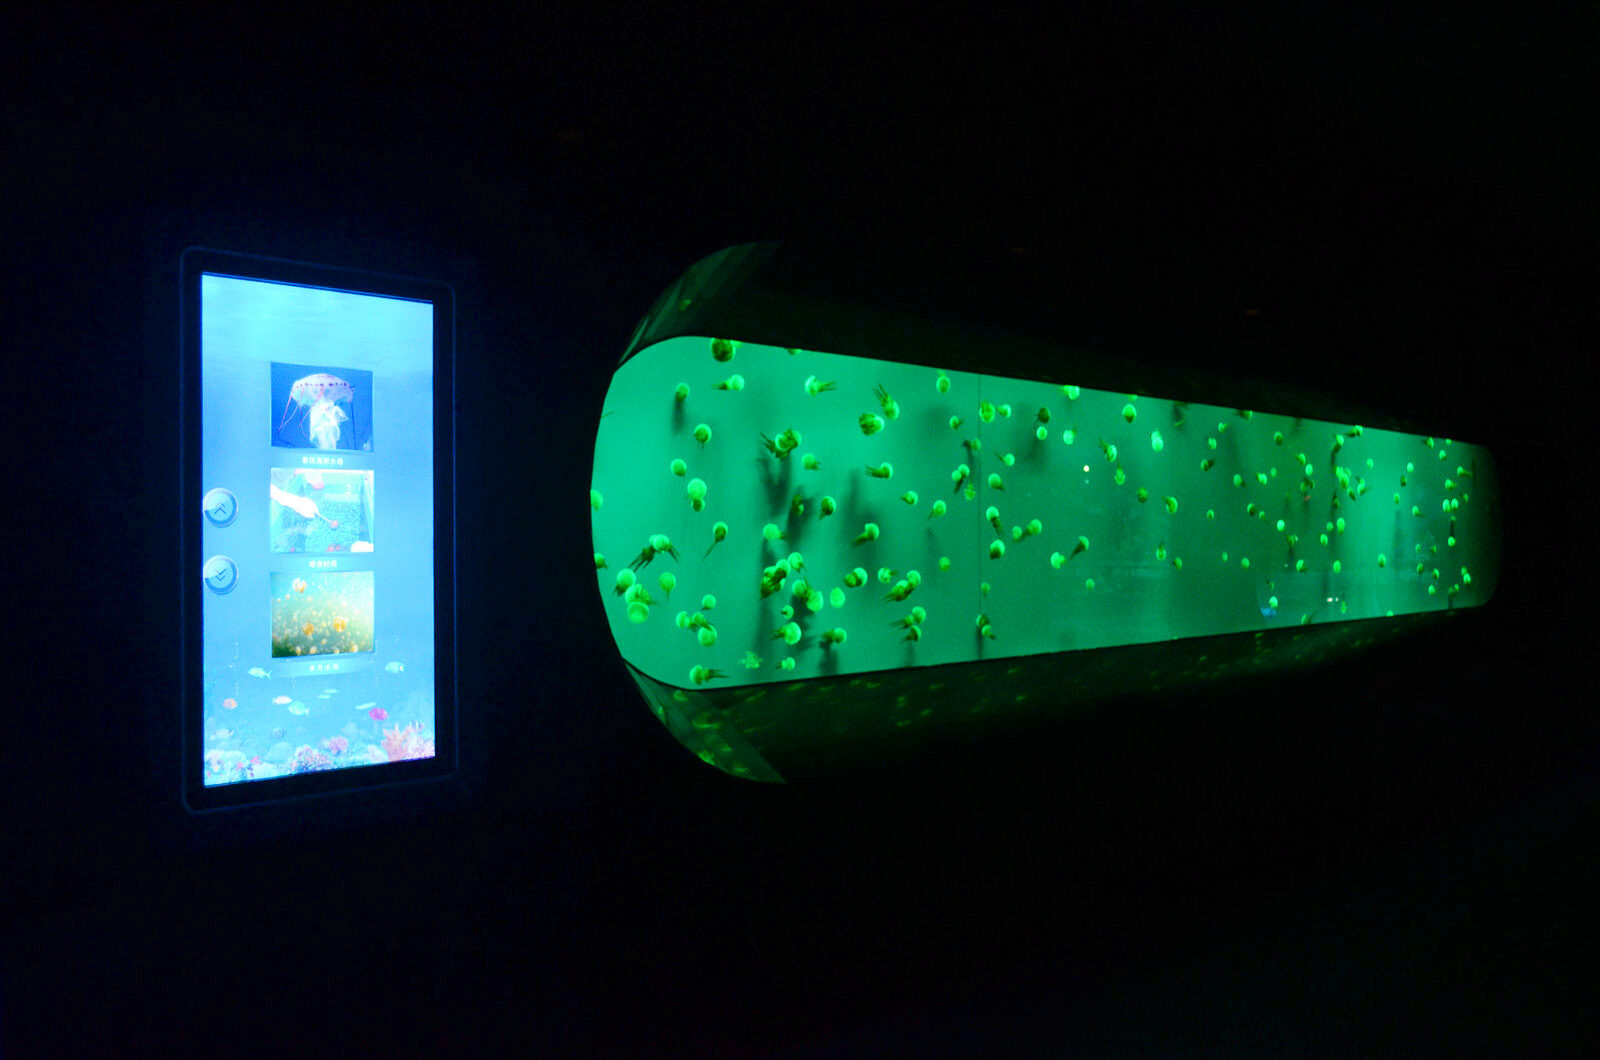 medusas acuario publico luz led orphek